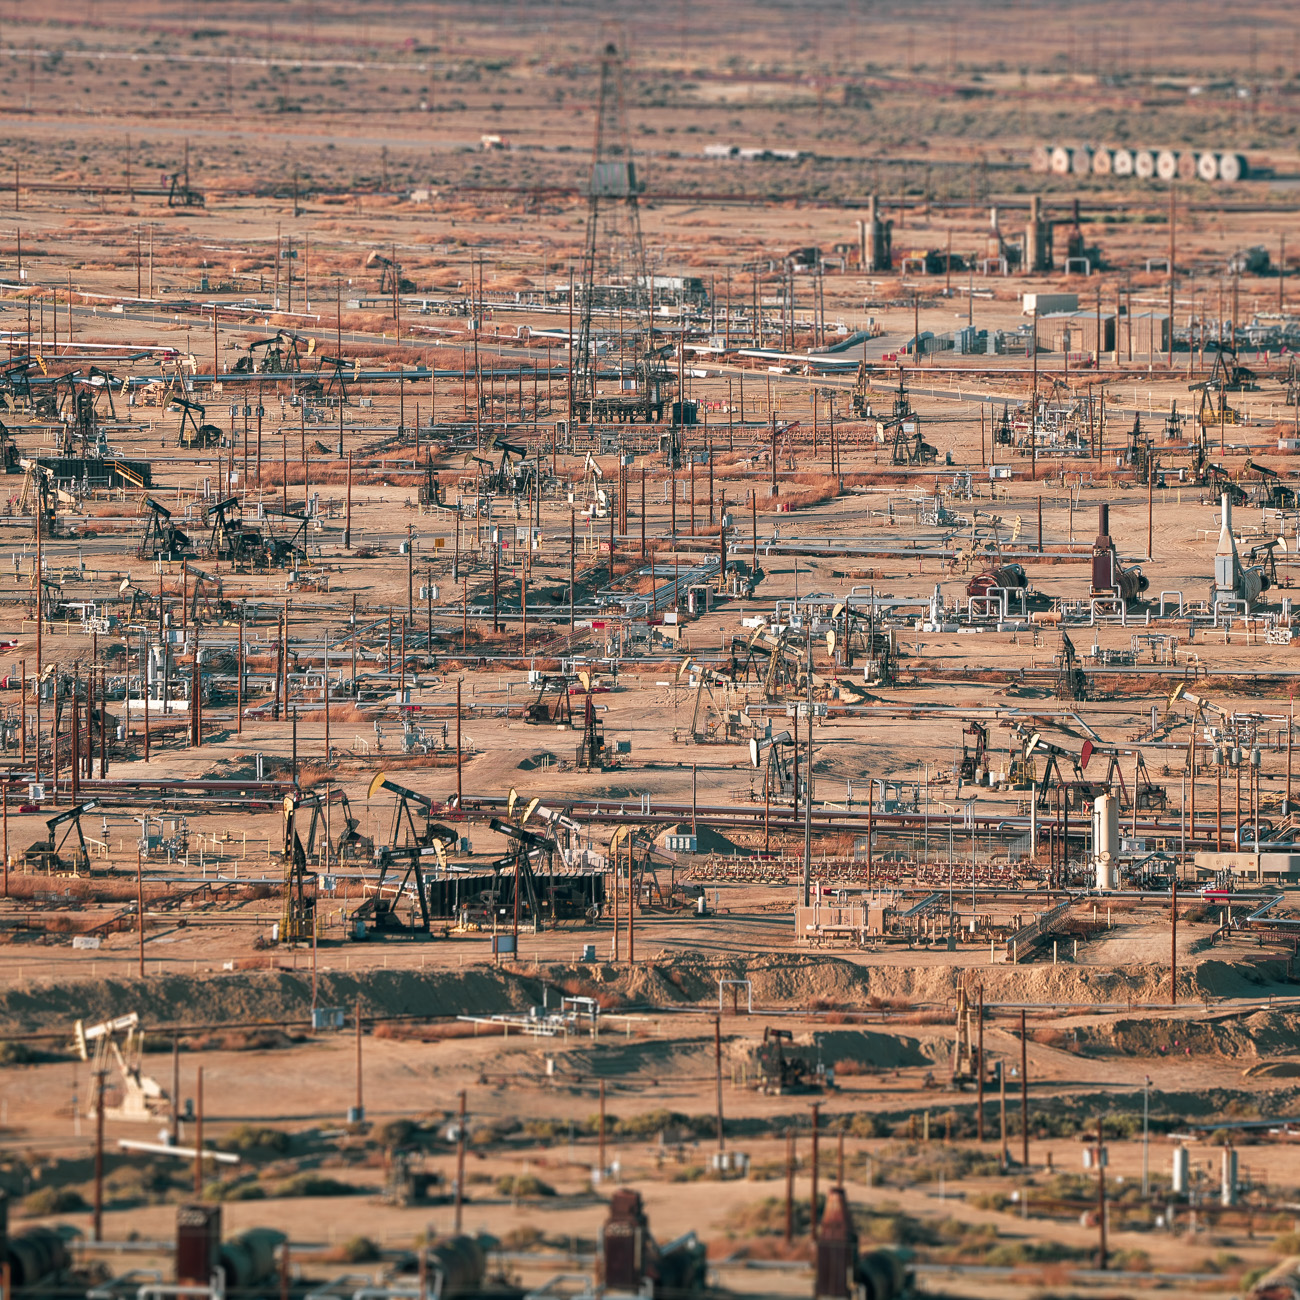 California Oil Field